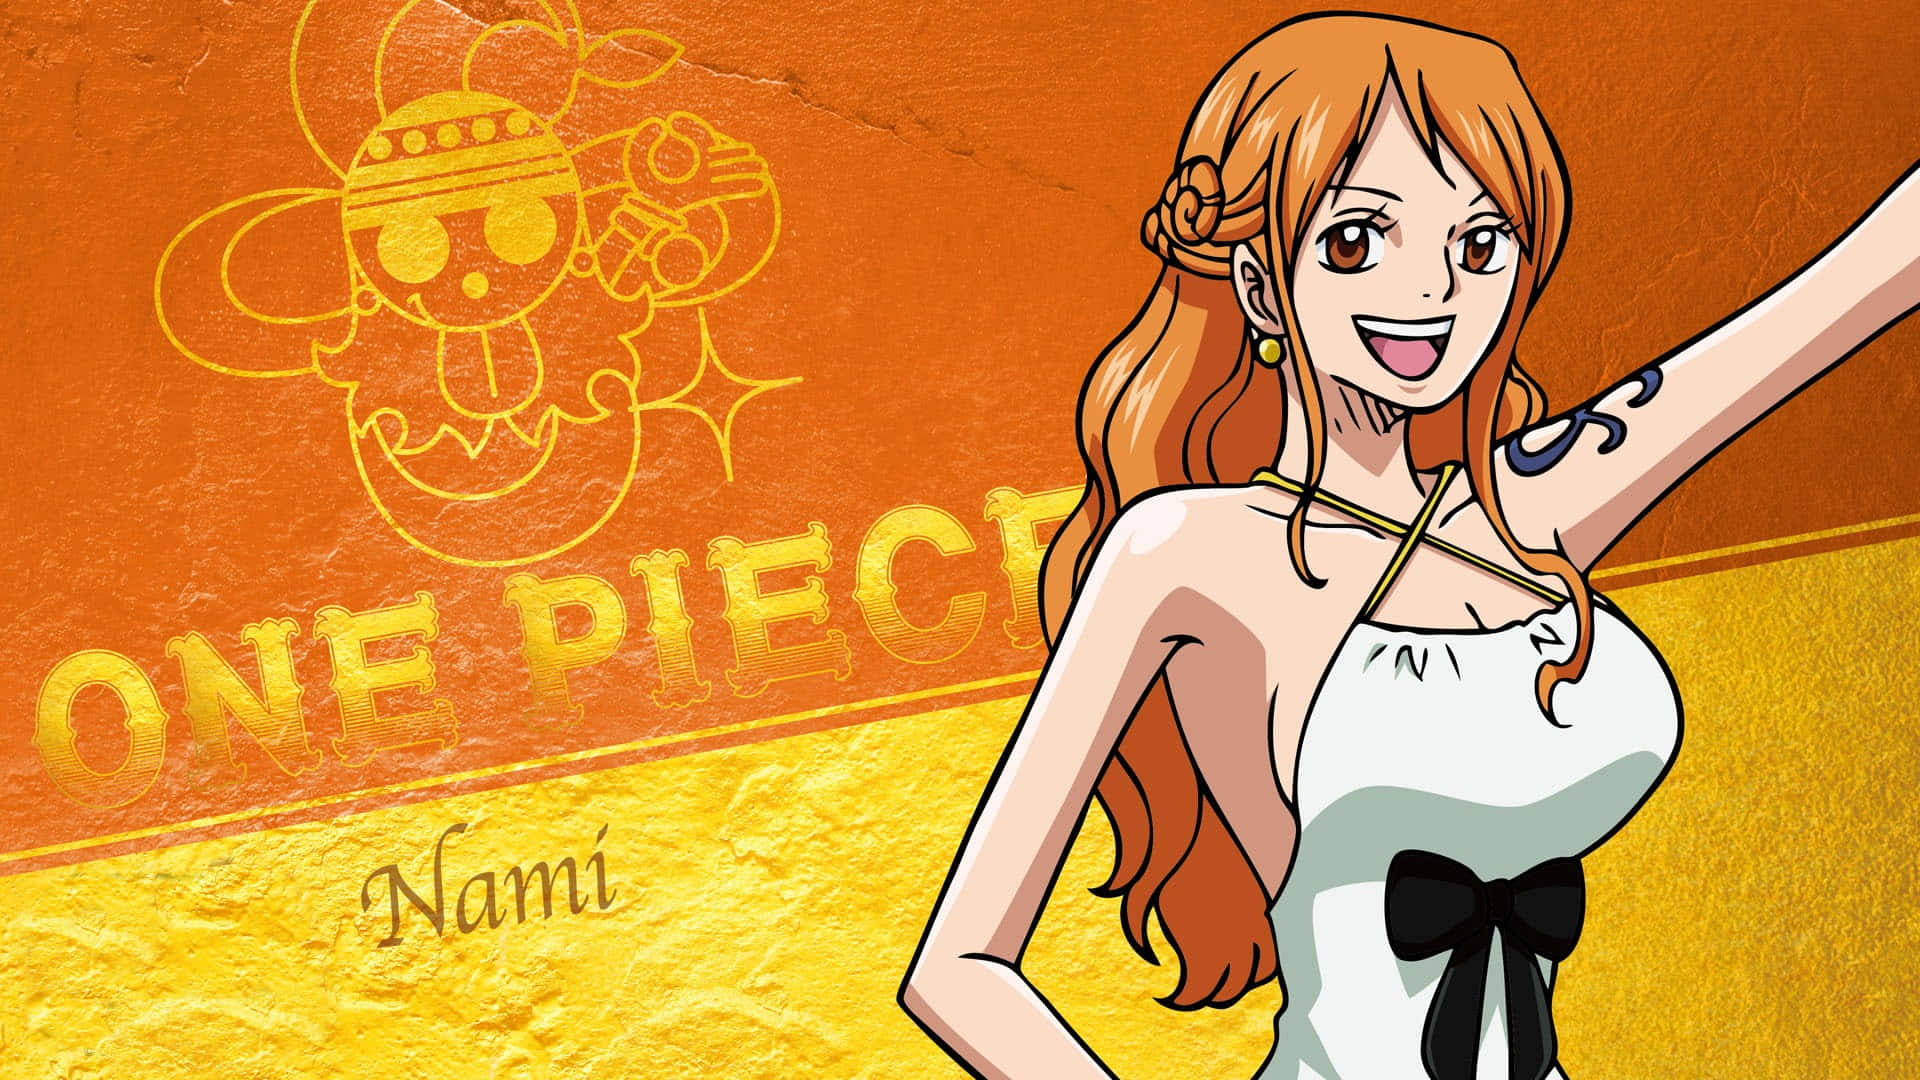 Aastuta E Inteligente Nami, A Navegadora De One Piece. Papel de Parede